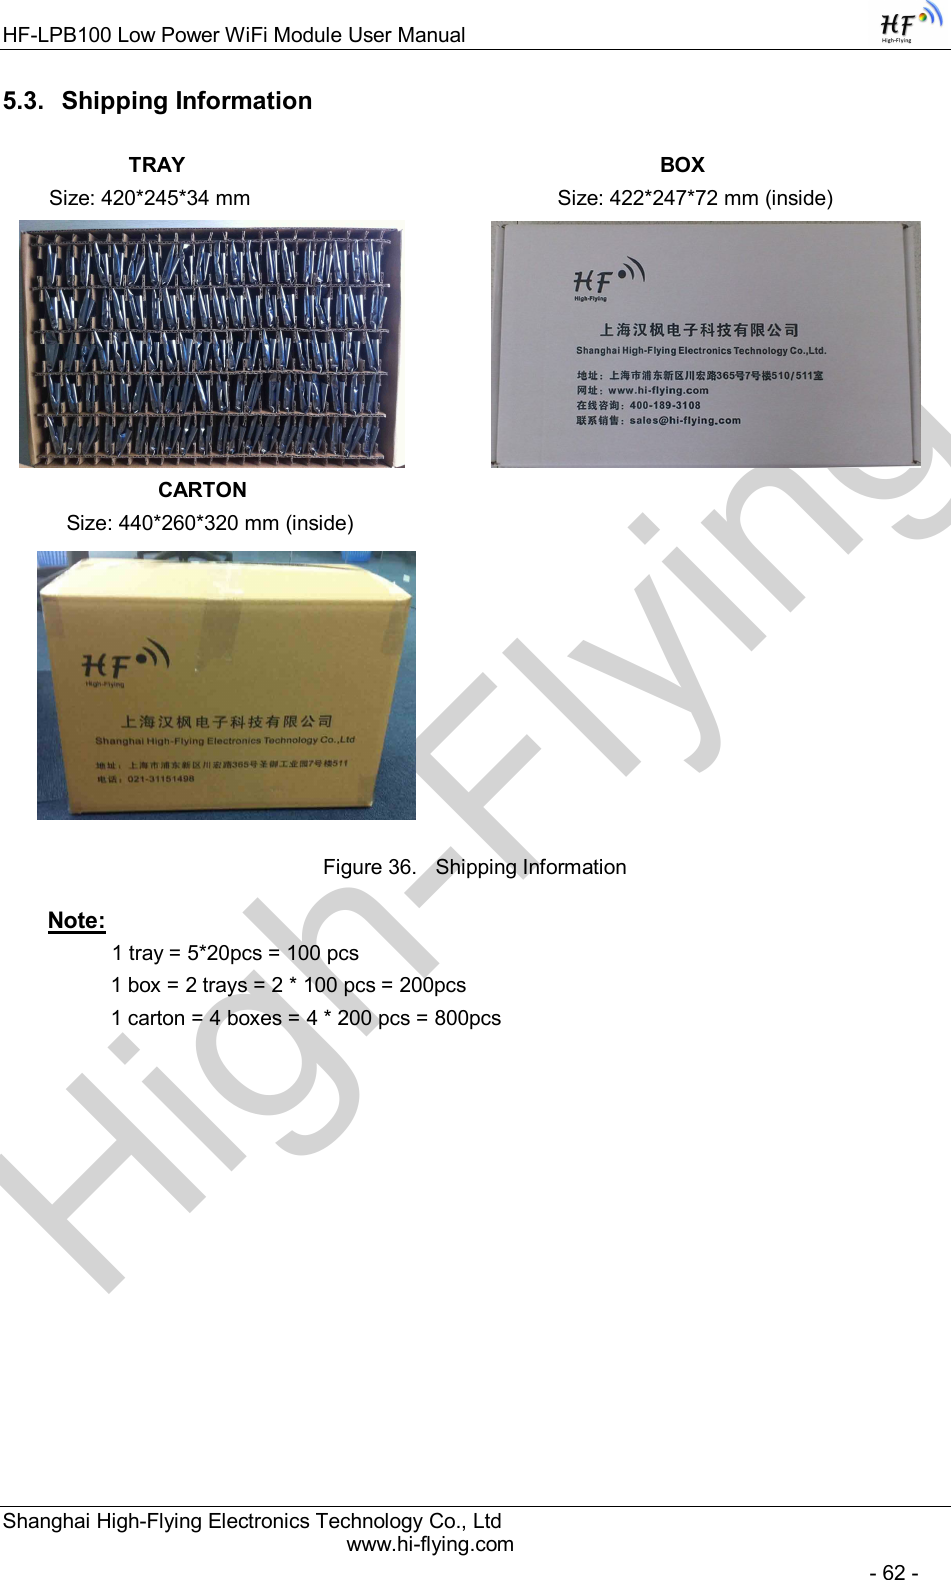 High-FlyingHF-LPB100 Low Power WiFi Module User Manual Shanghai High-Flying Electronics Technology Co., Ltd www.hi-flying.com   - 62 - 5.3.  Shipping Information             TRAY                                                                                  BOX         Size: 420*245*34 mm                                                     Size: 422*247*72 mm (inside)                                CARTON                 Size: 440*260*320 mm (inside)       Figure 36.  Shipping Information Note:               1 tray = 5*20pcs = 100 pcs          1 box = 2 trays = 2 * 100 pcs = 200pcs           1 carton = 4 boxes = 4 * 200 pcs = 800pcs    